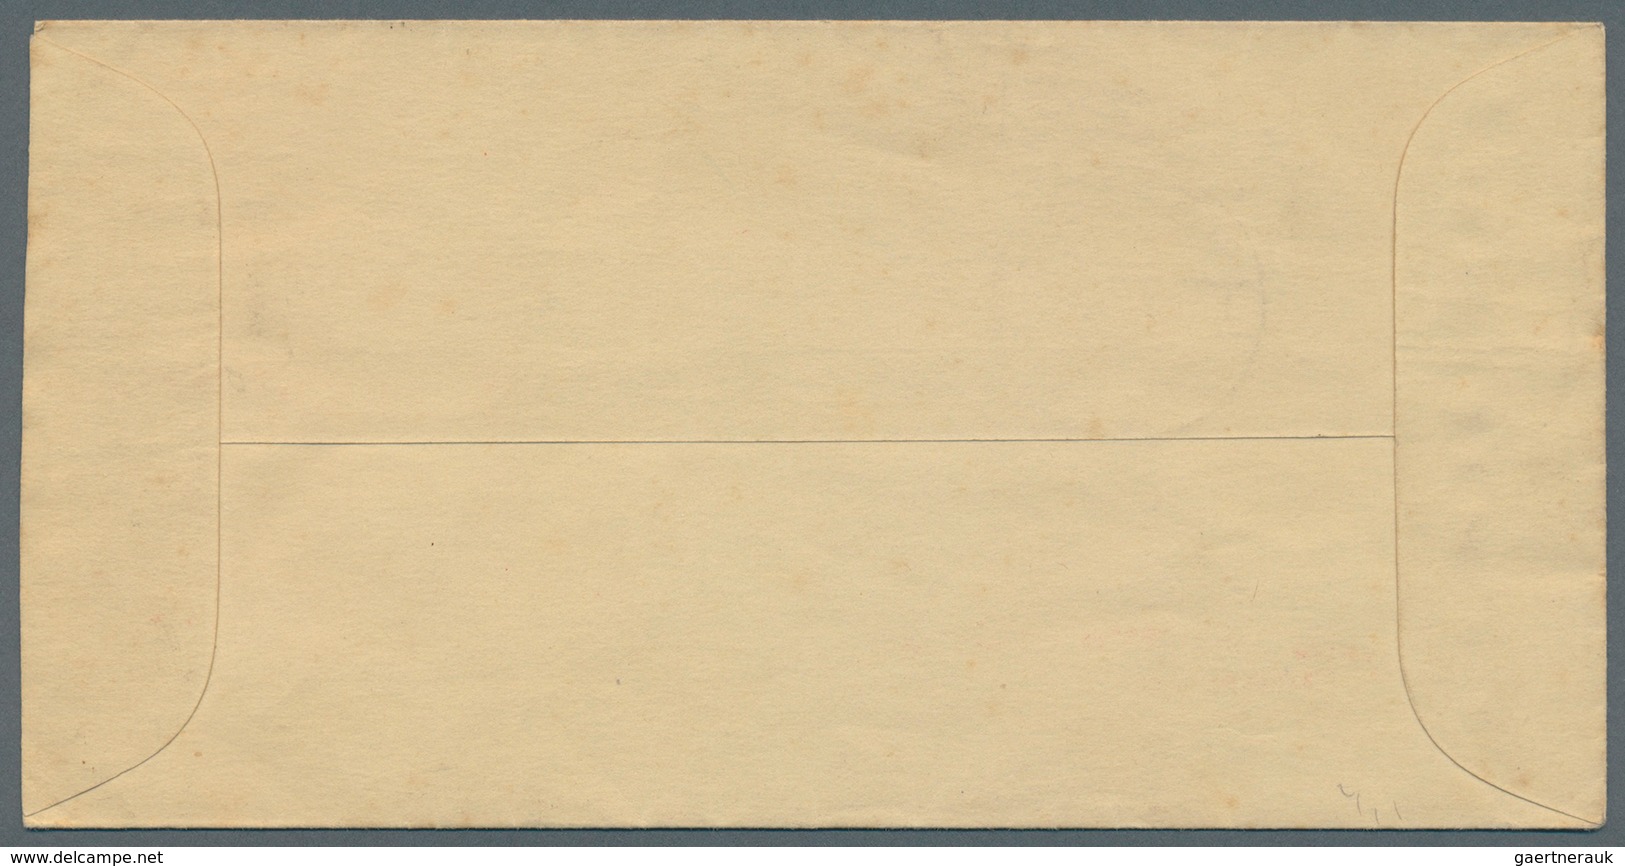 Thailand - Ganzsachen: 1940. Postal Stationery Envelope 15 Satang Blue Endorsed 'On Active Service' - Thailand